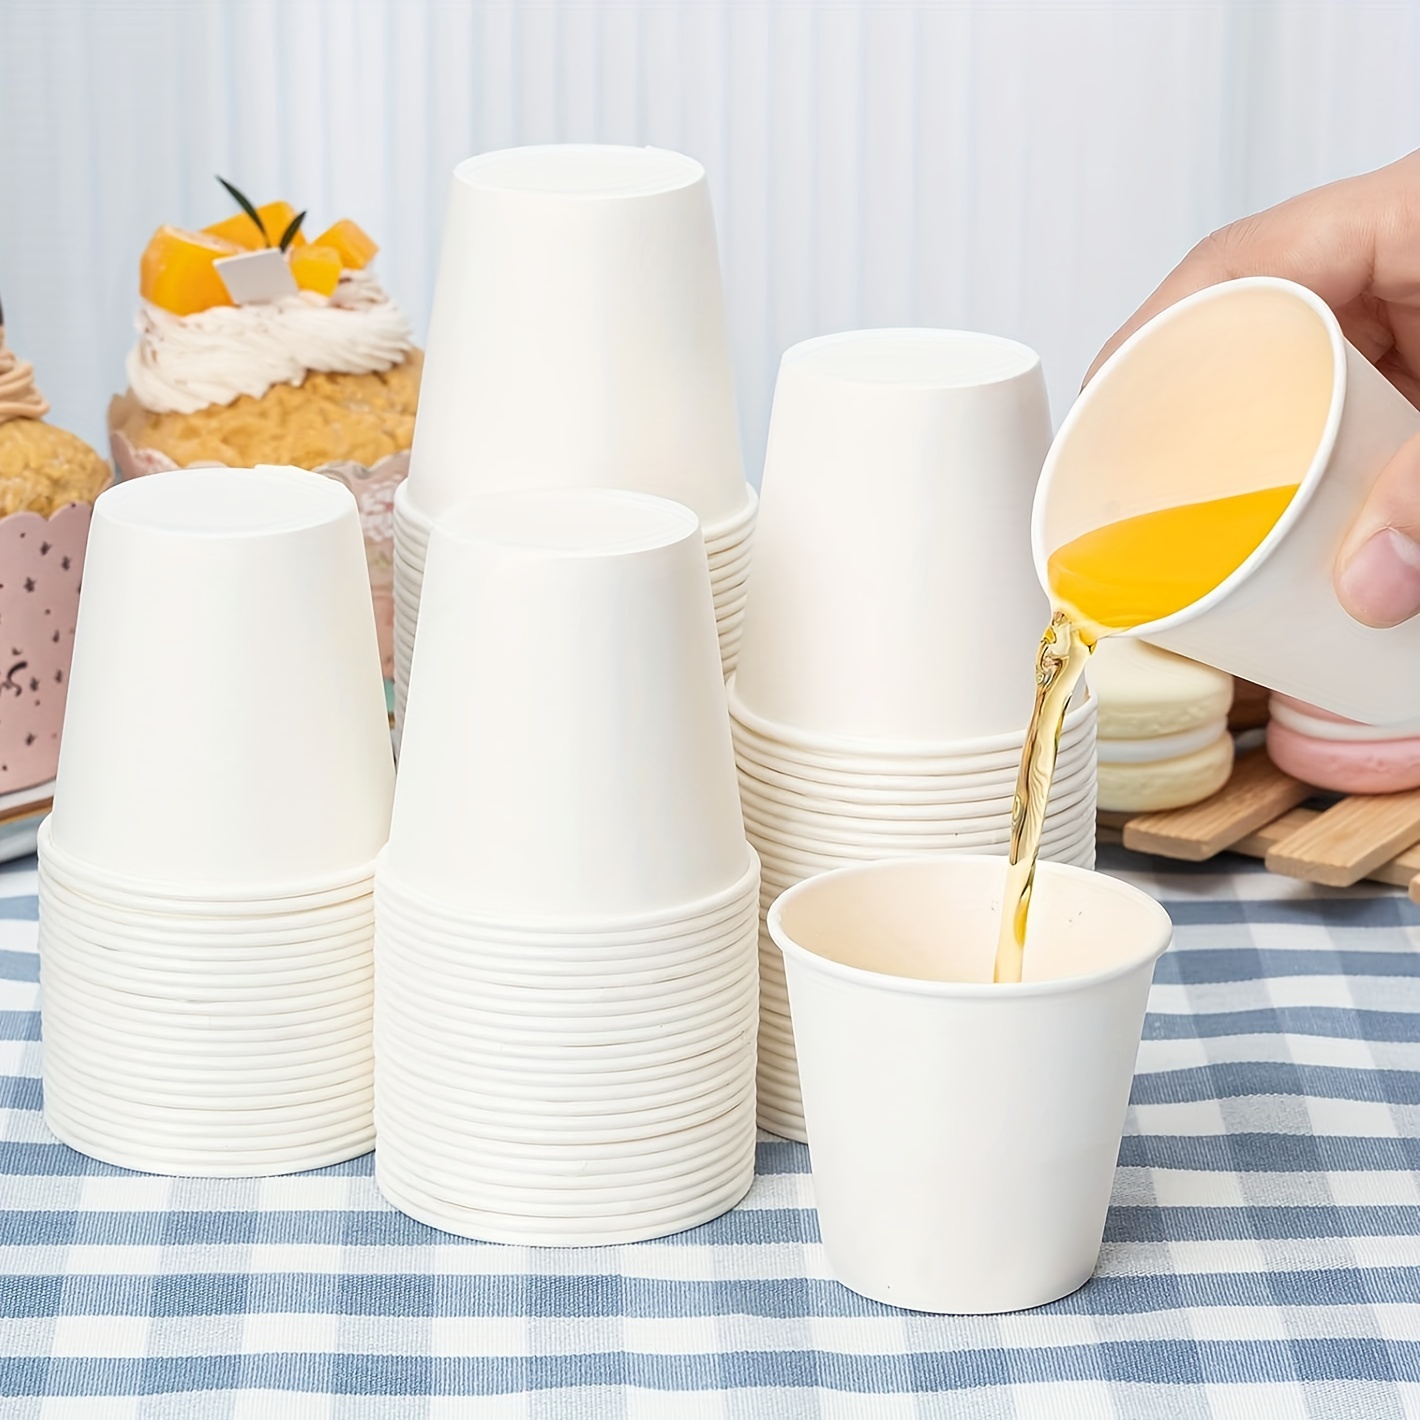 150 Pcs Christmas Snowman Hot Cups with Lids - Disposable 12oz Paper Cups  Set fo